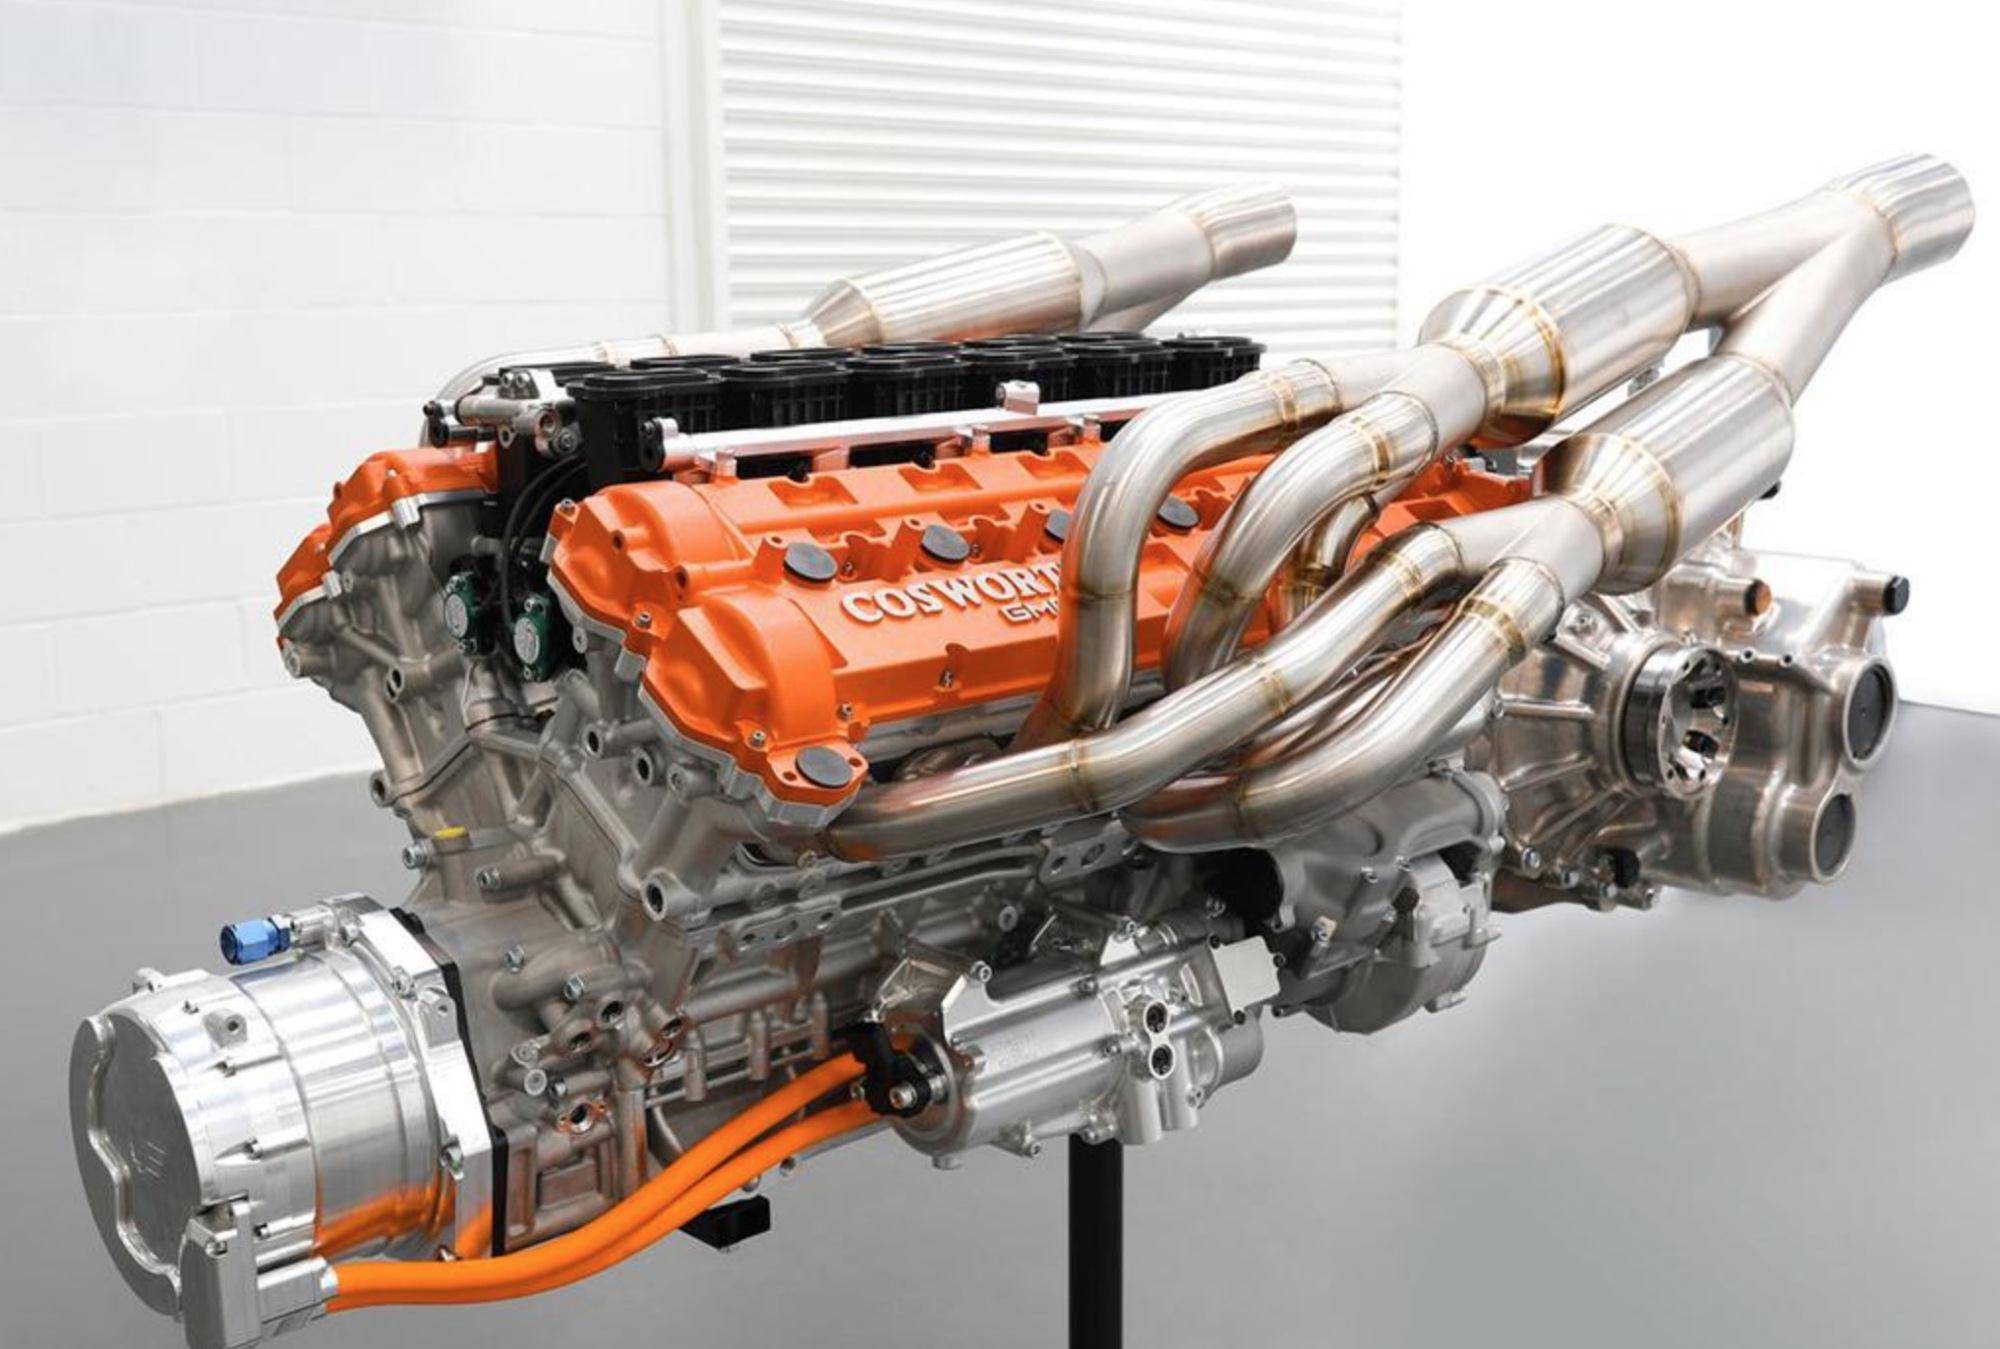 0l v12发动机只有区区的654匹马力,峰值扭矩466牛米,没有上千匹的马力